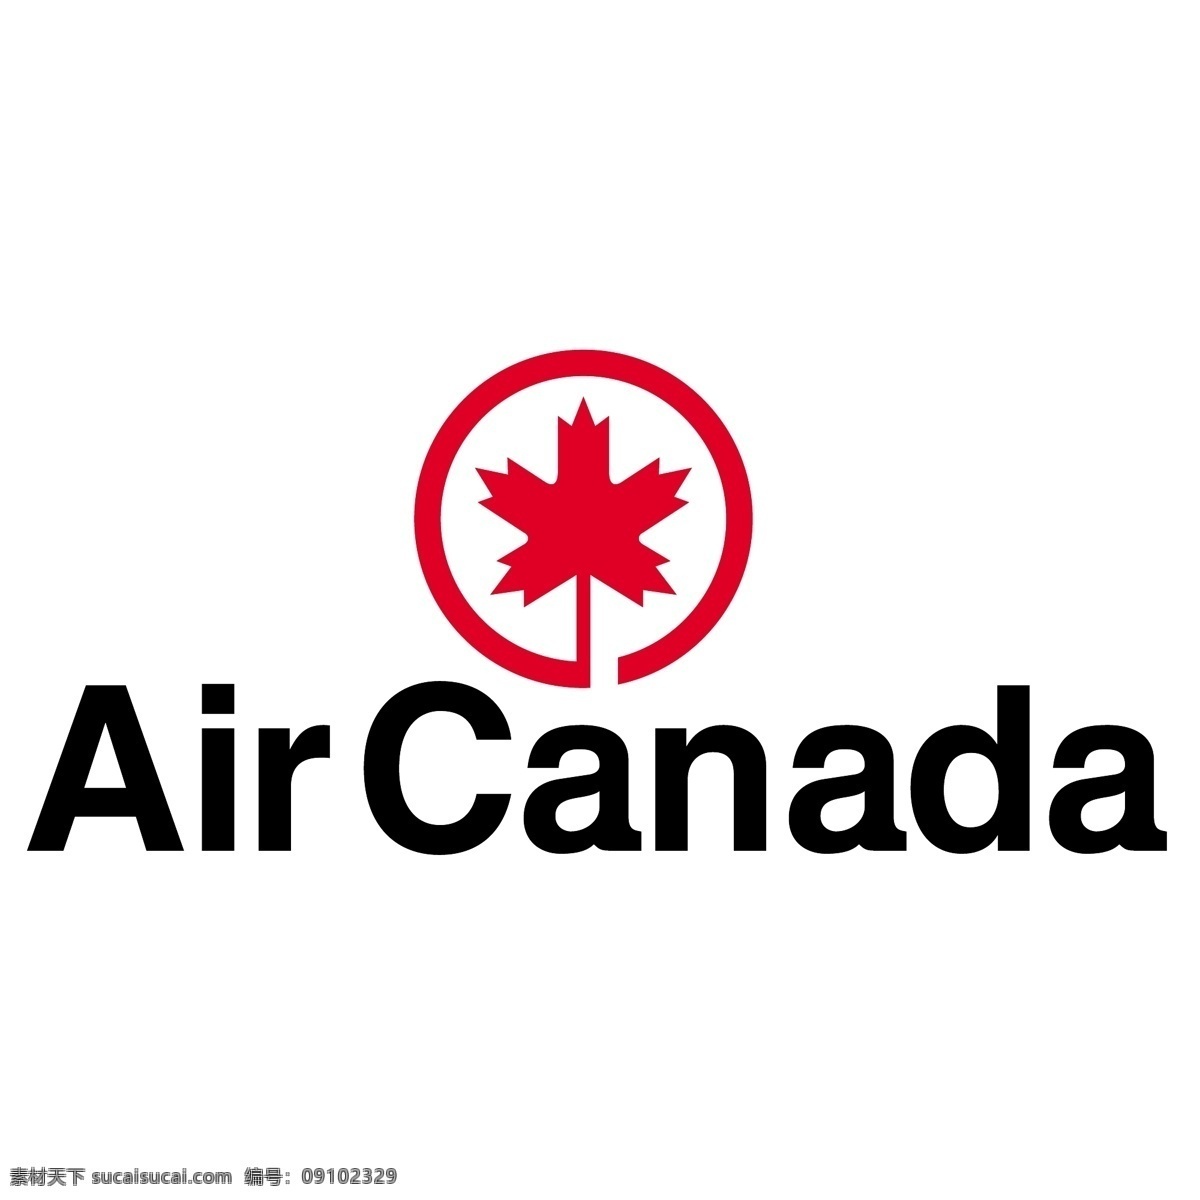 logo 标识 标识标志图标 标志 企业logo 企业 air canada 航空公司 航空标识 矢量 矢量图